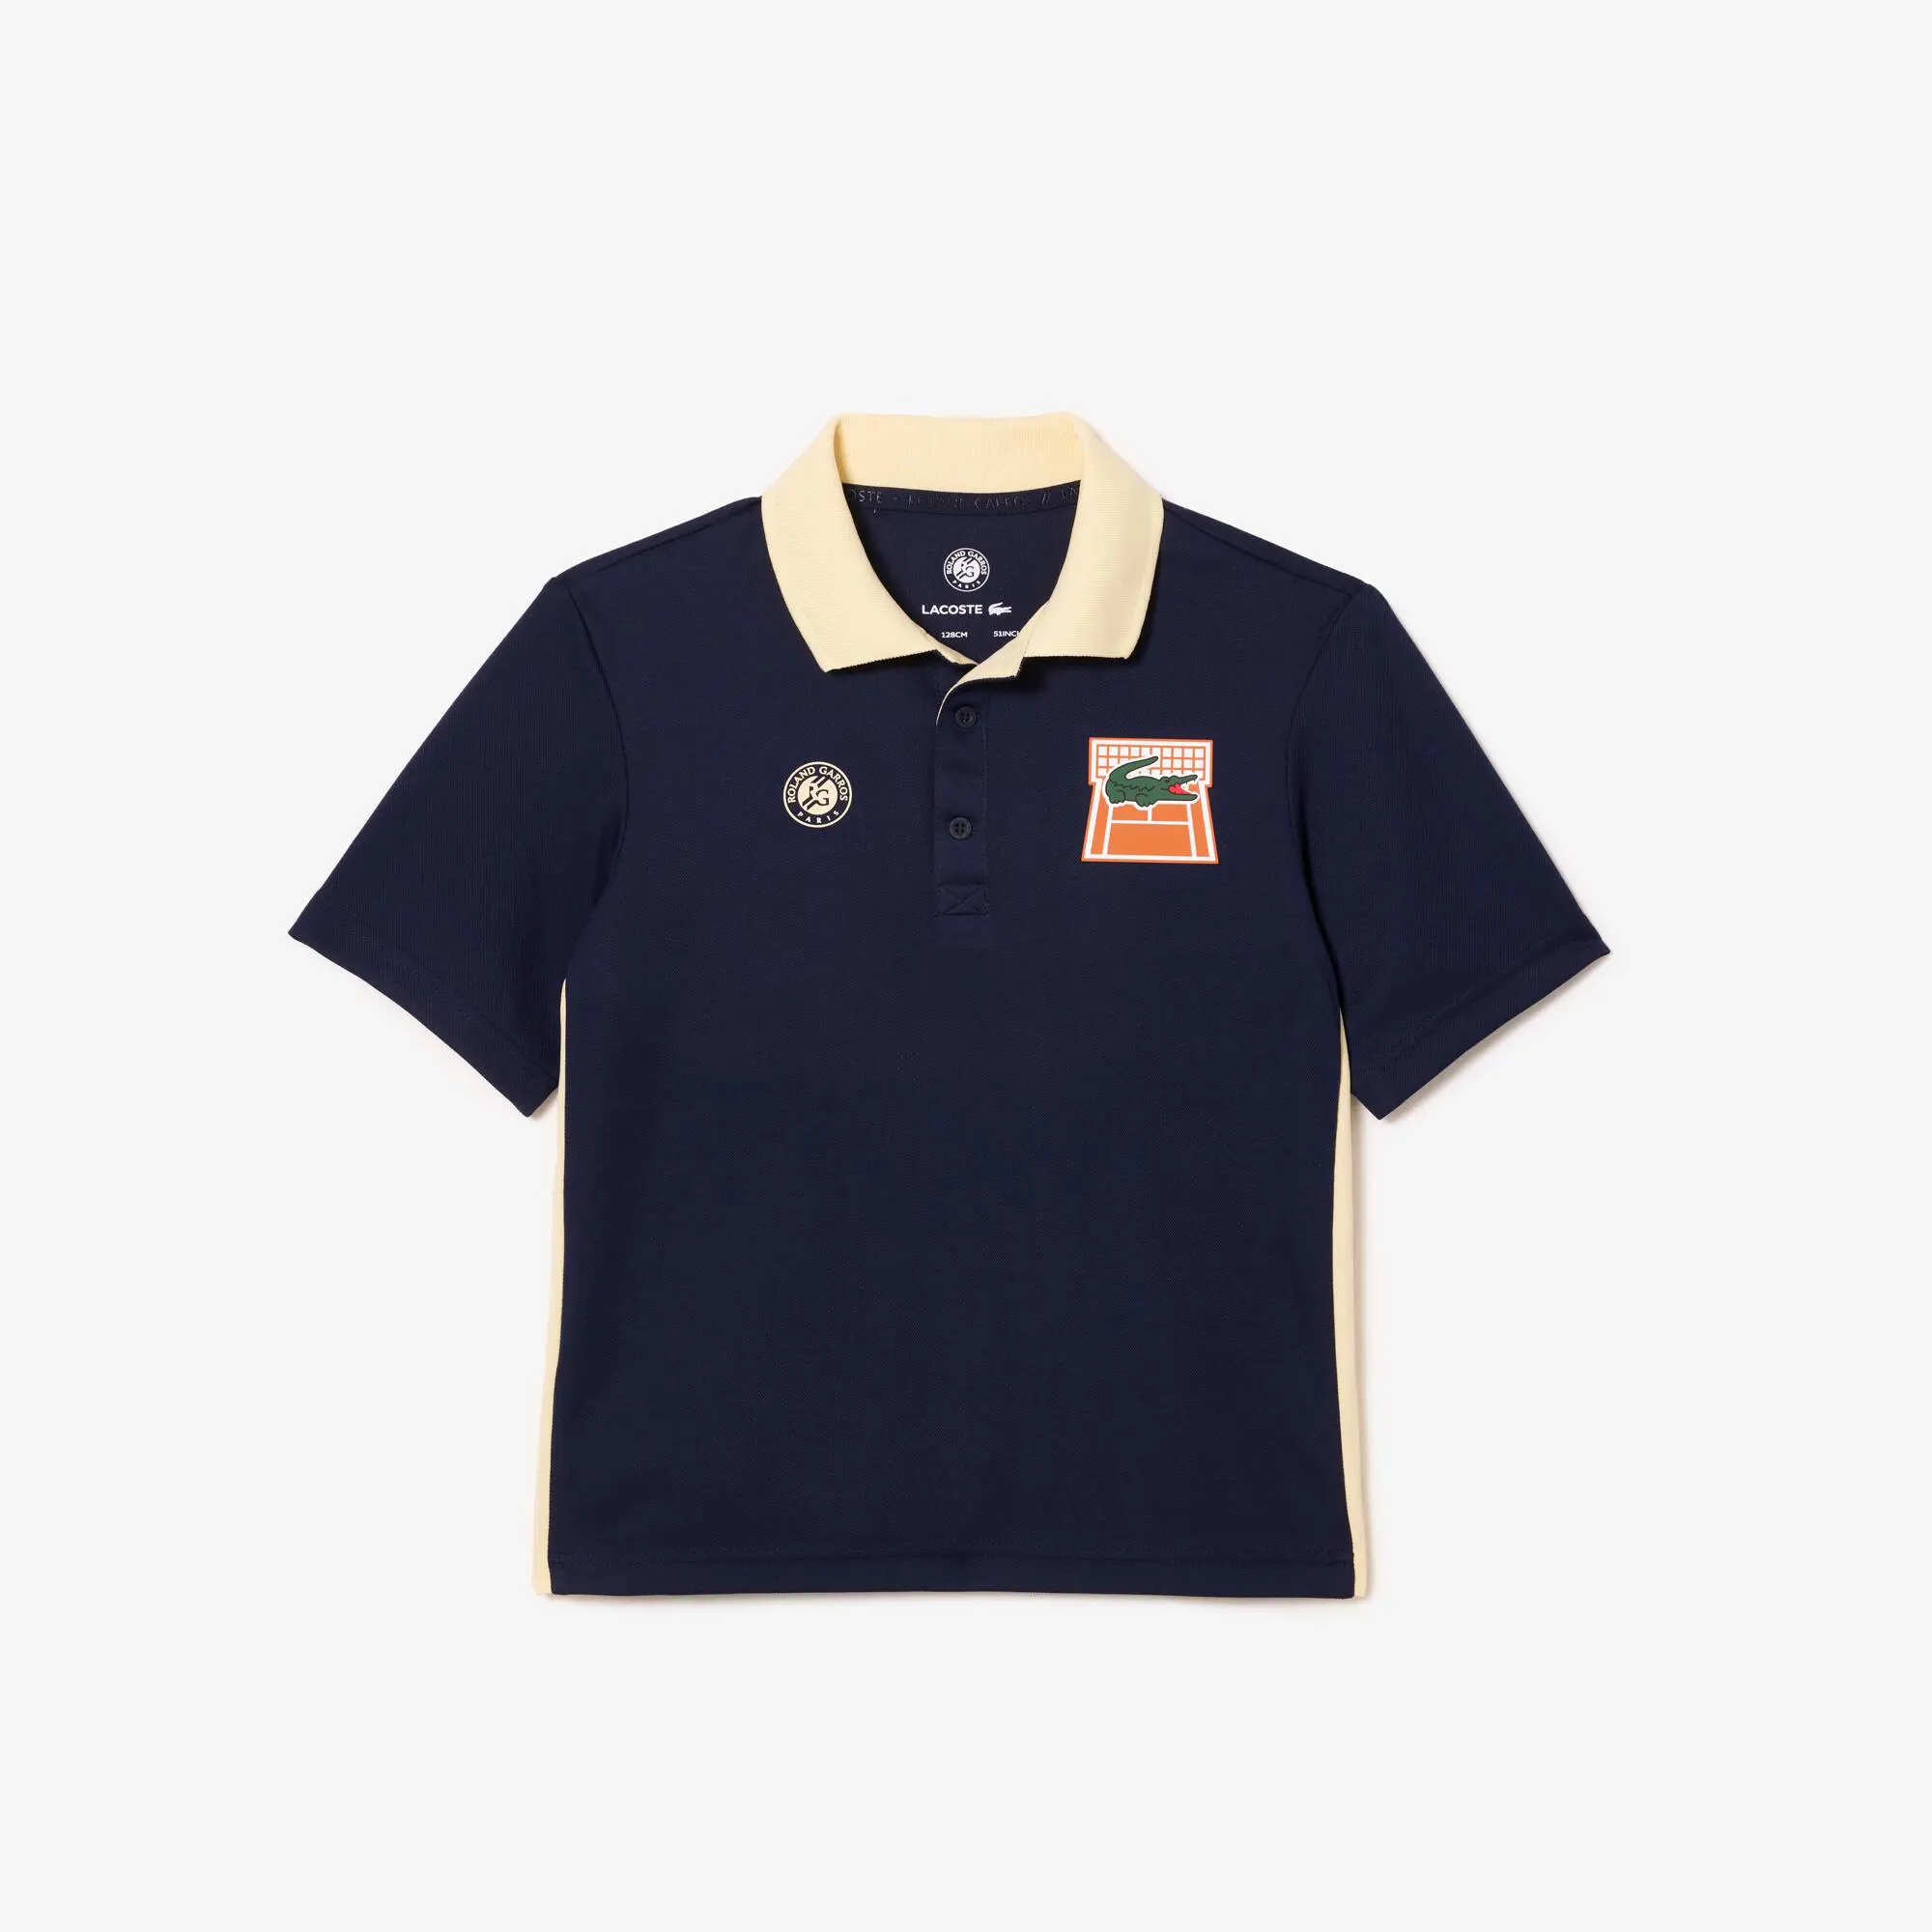 Lacoste Kids’ Lacoste Sport Roland Garros Edition Polo Shirt. 1